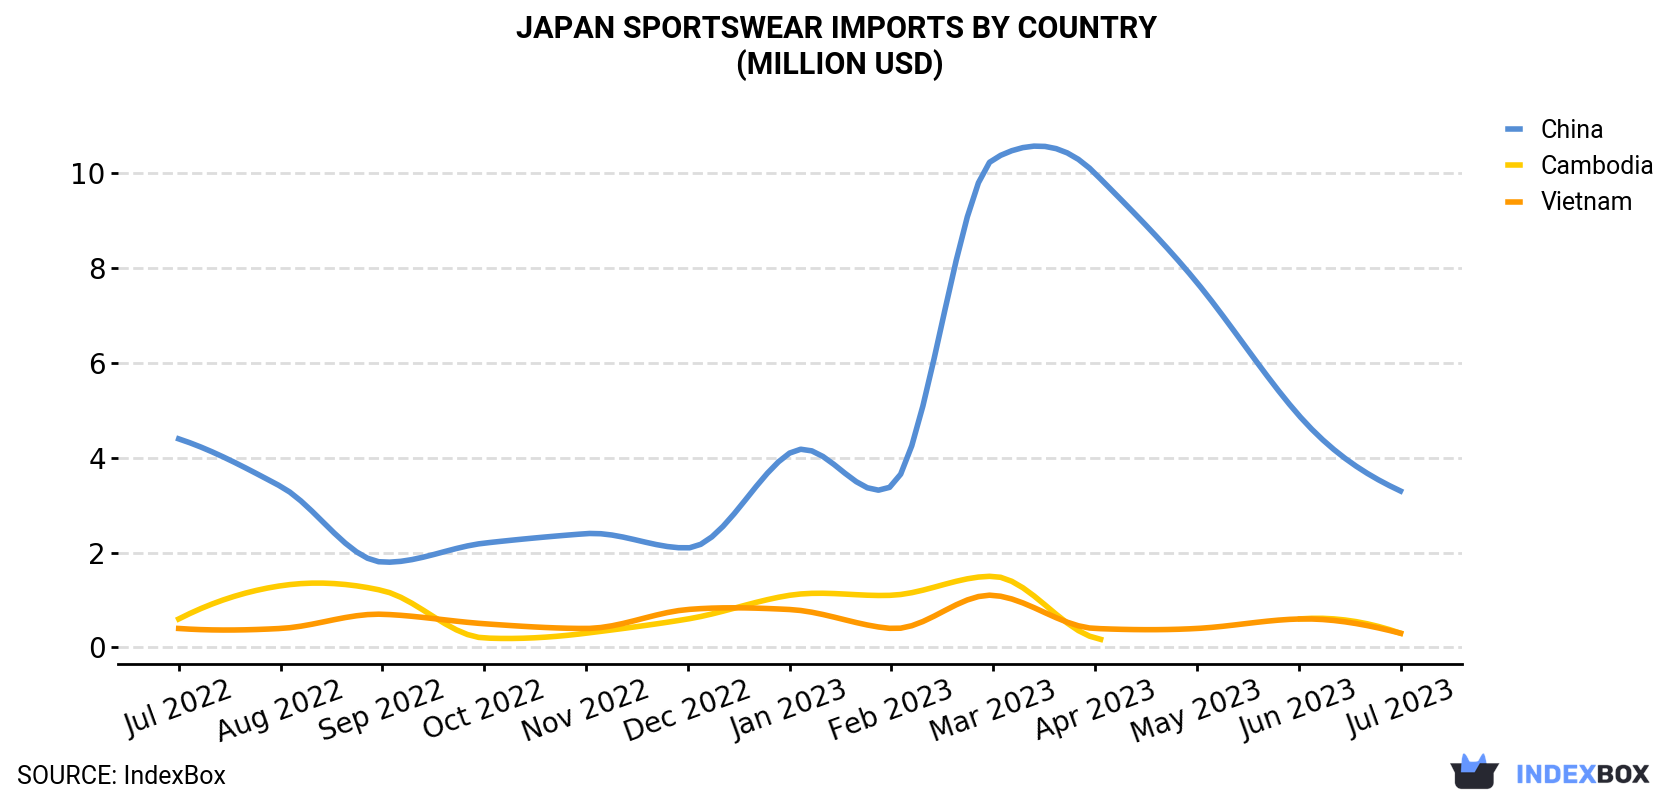 Japan Sportswear Imports By Country (Million USD)